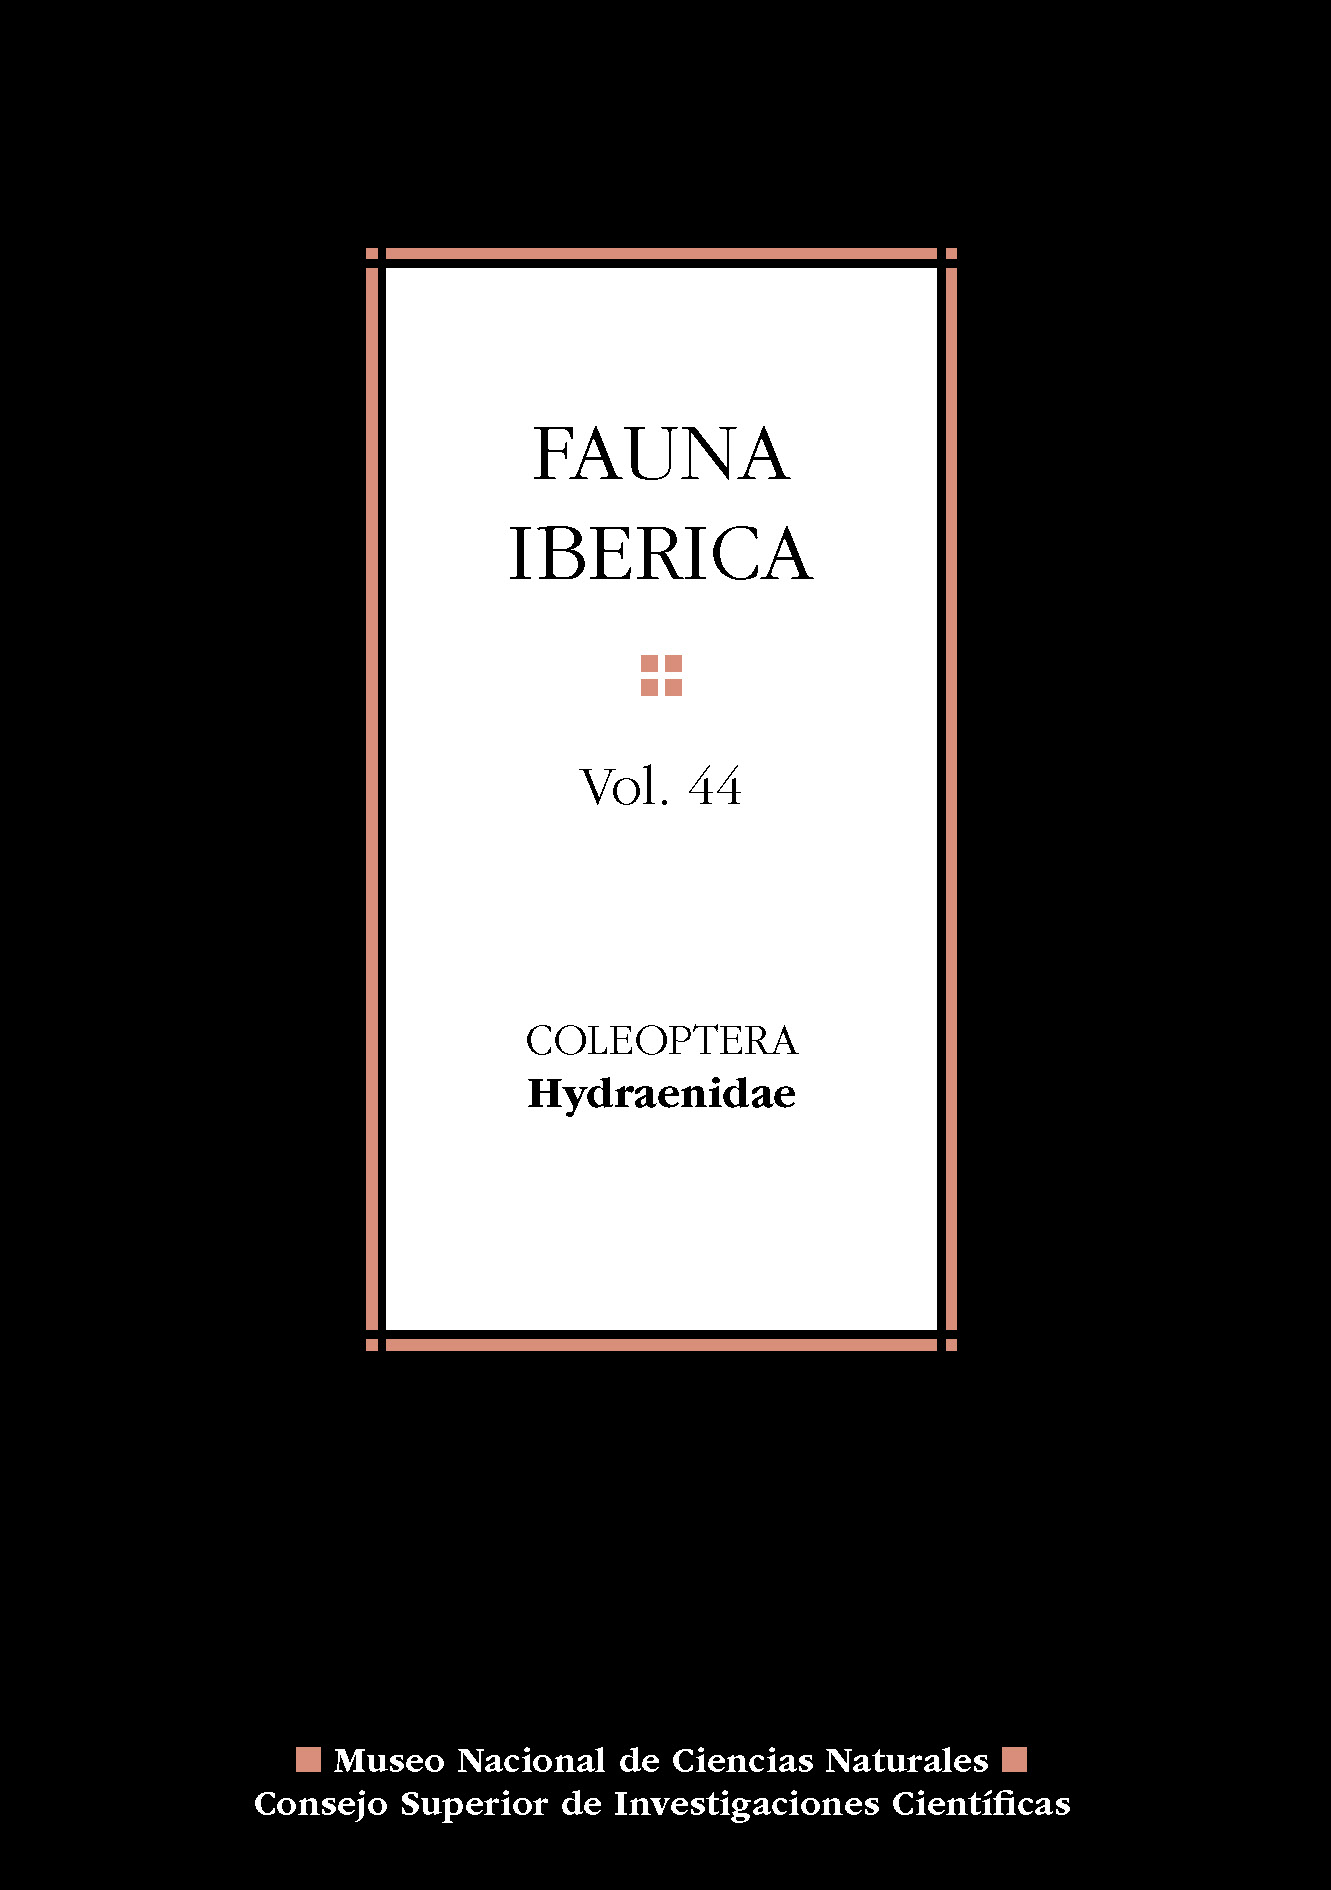 Fauna iberica. Vol. 44. Coleoptera. Hydraenidae